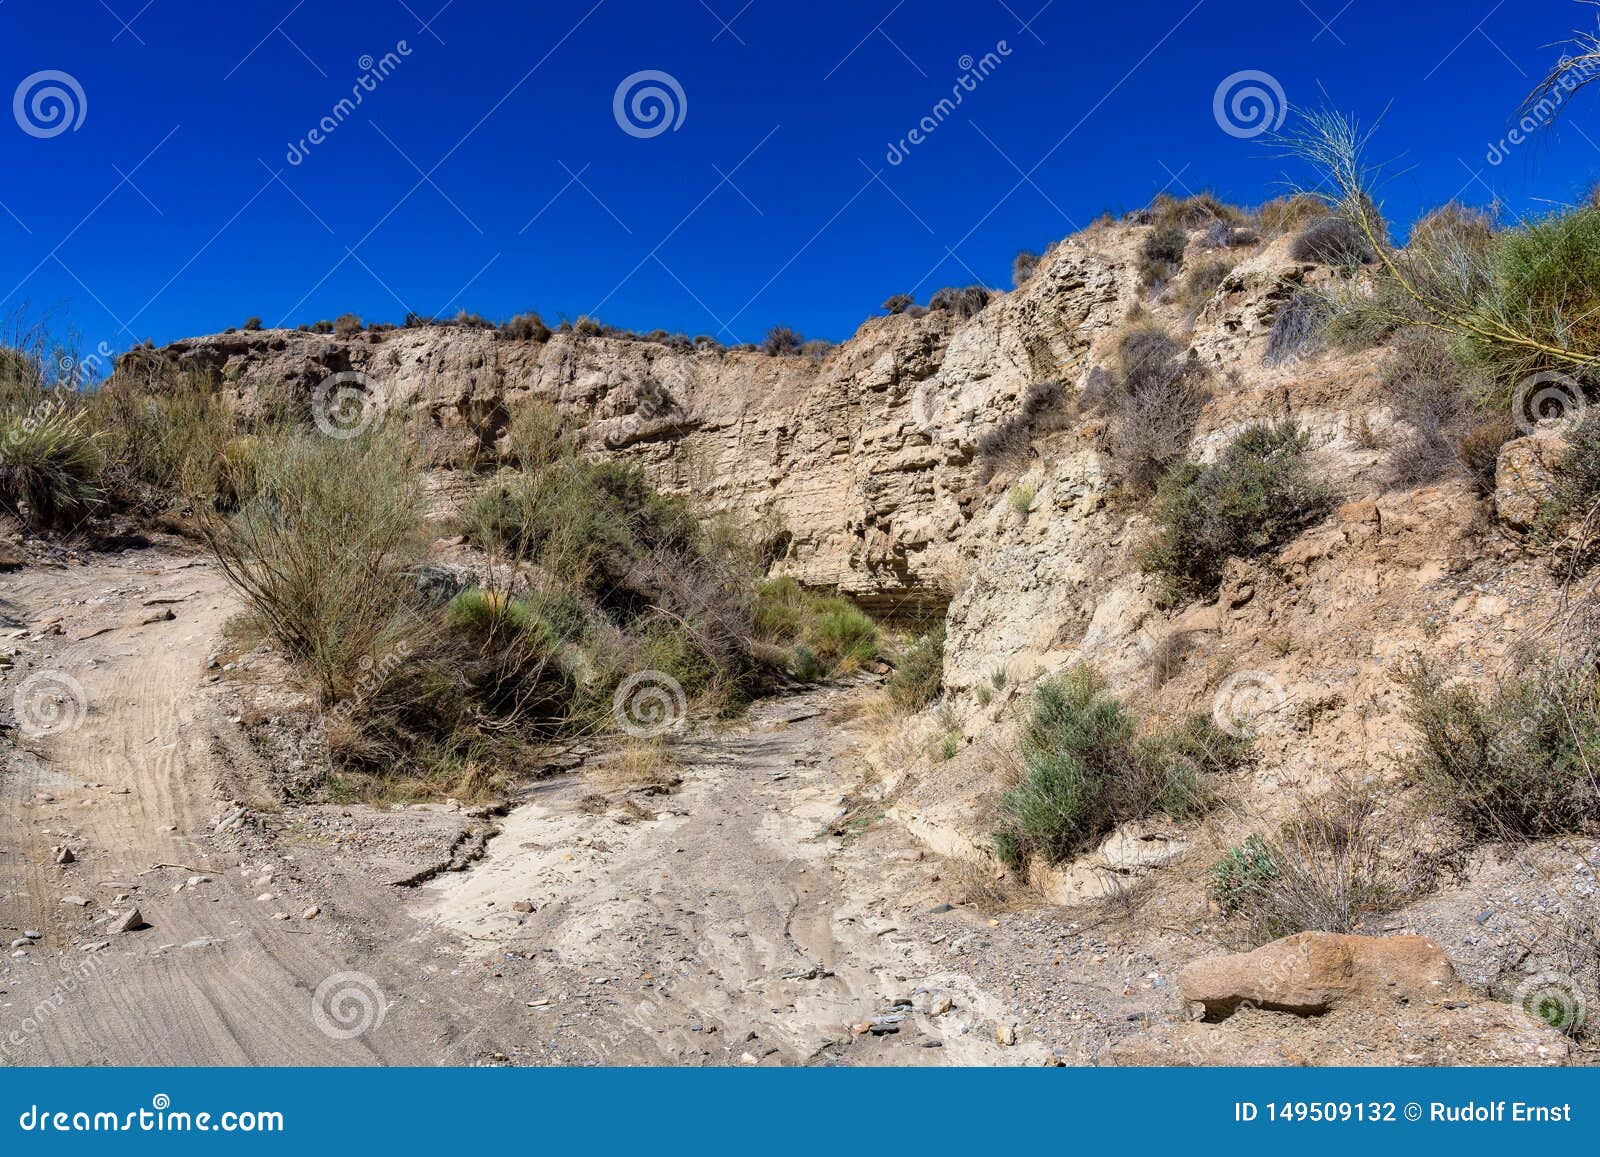 tabernas desert, in spanish desierto de tabernas, andalusia, spain